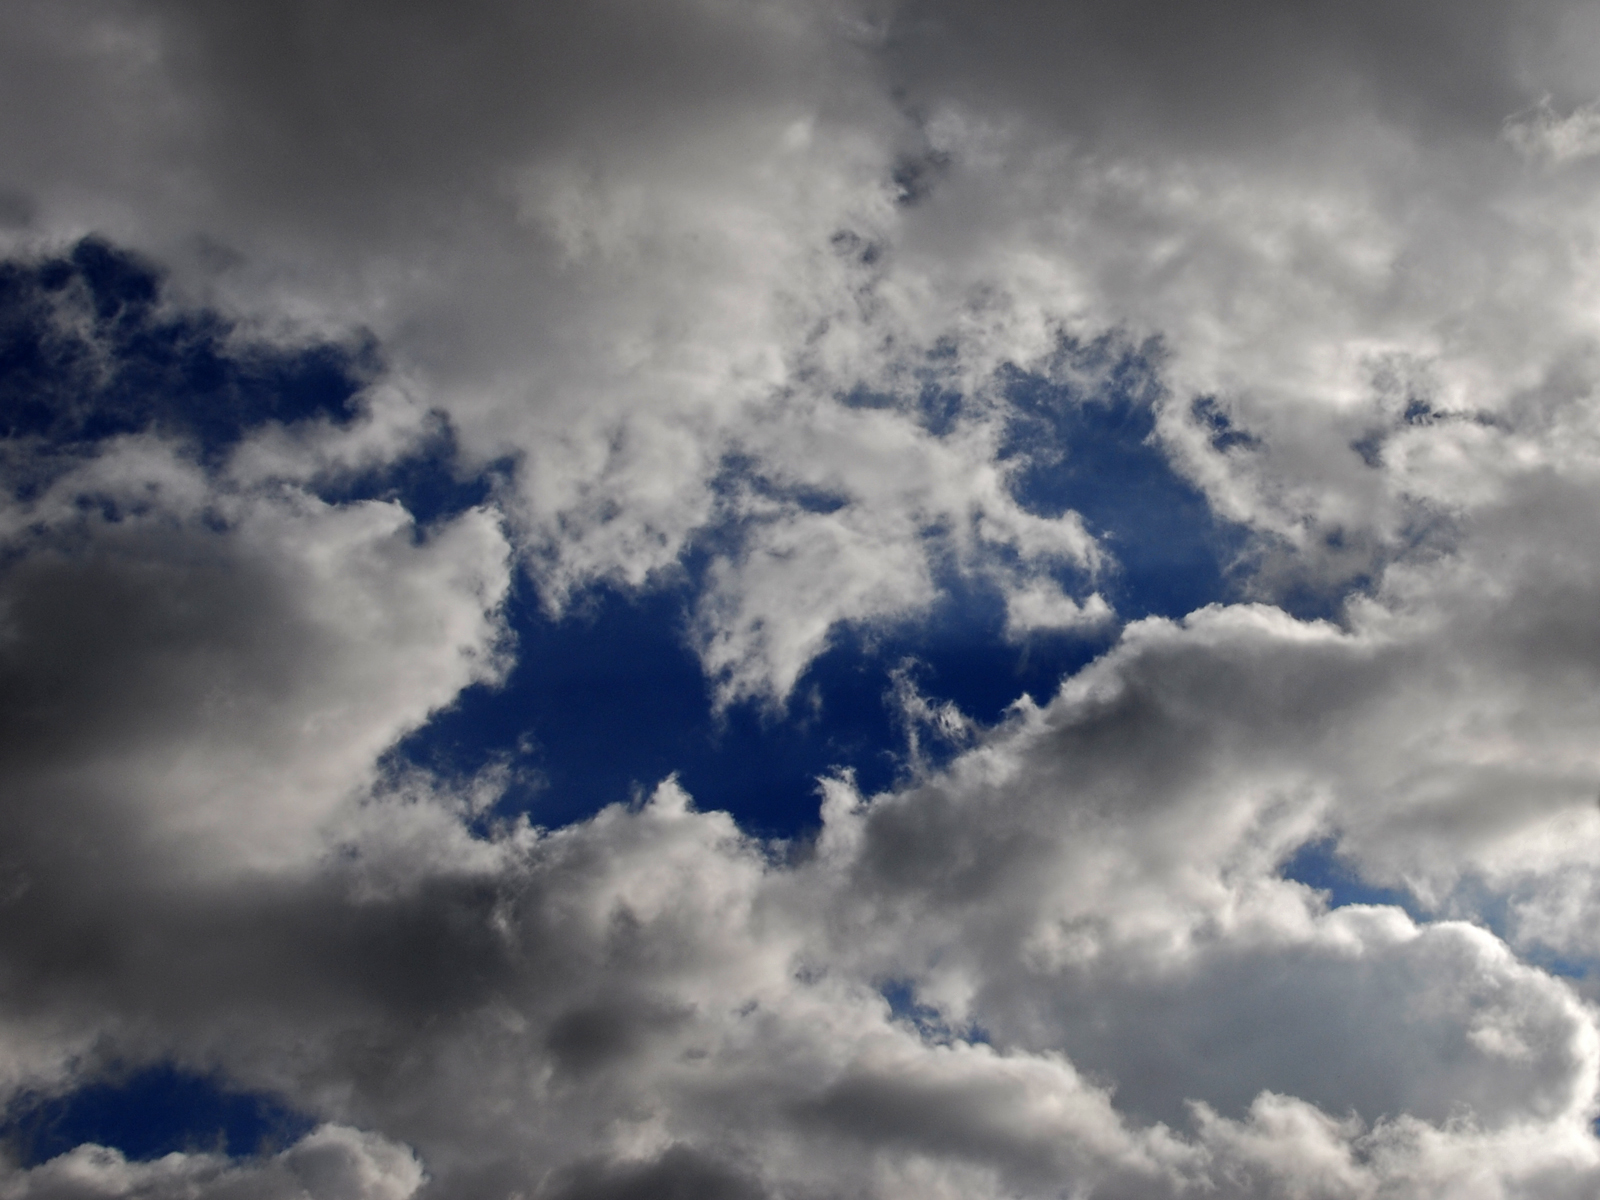 Rain cloud series (image 4 of 15) photo